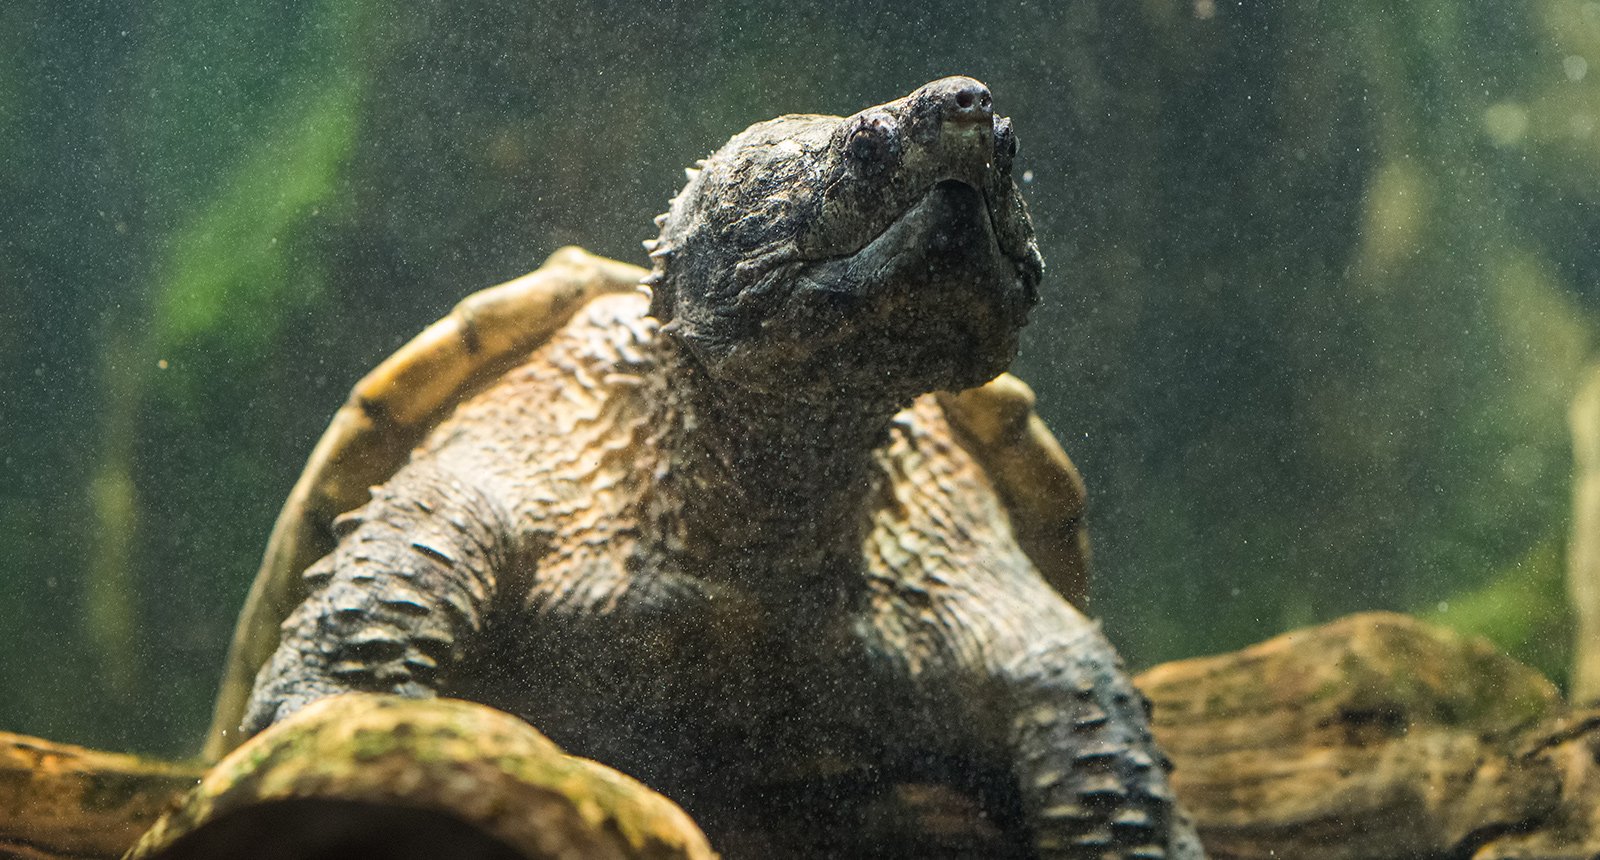 Alligator snapping turtle* - Macrochelys temnicki